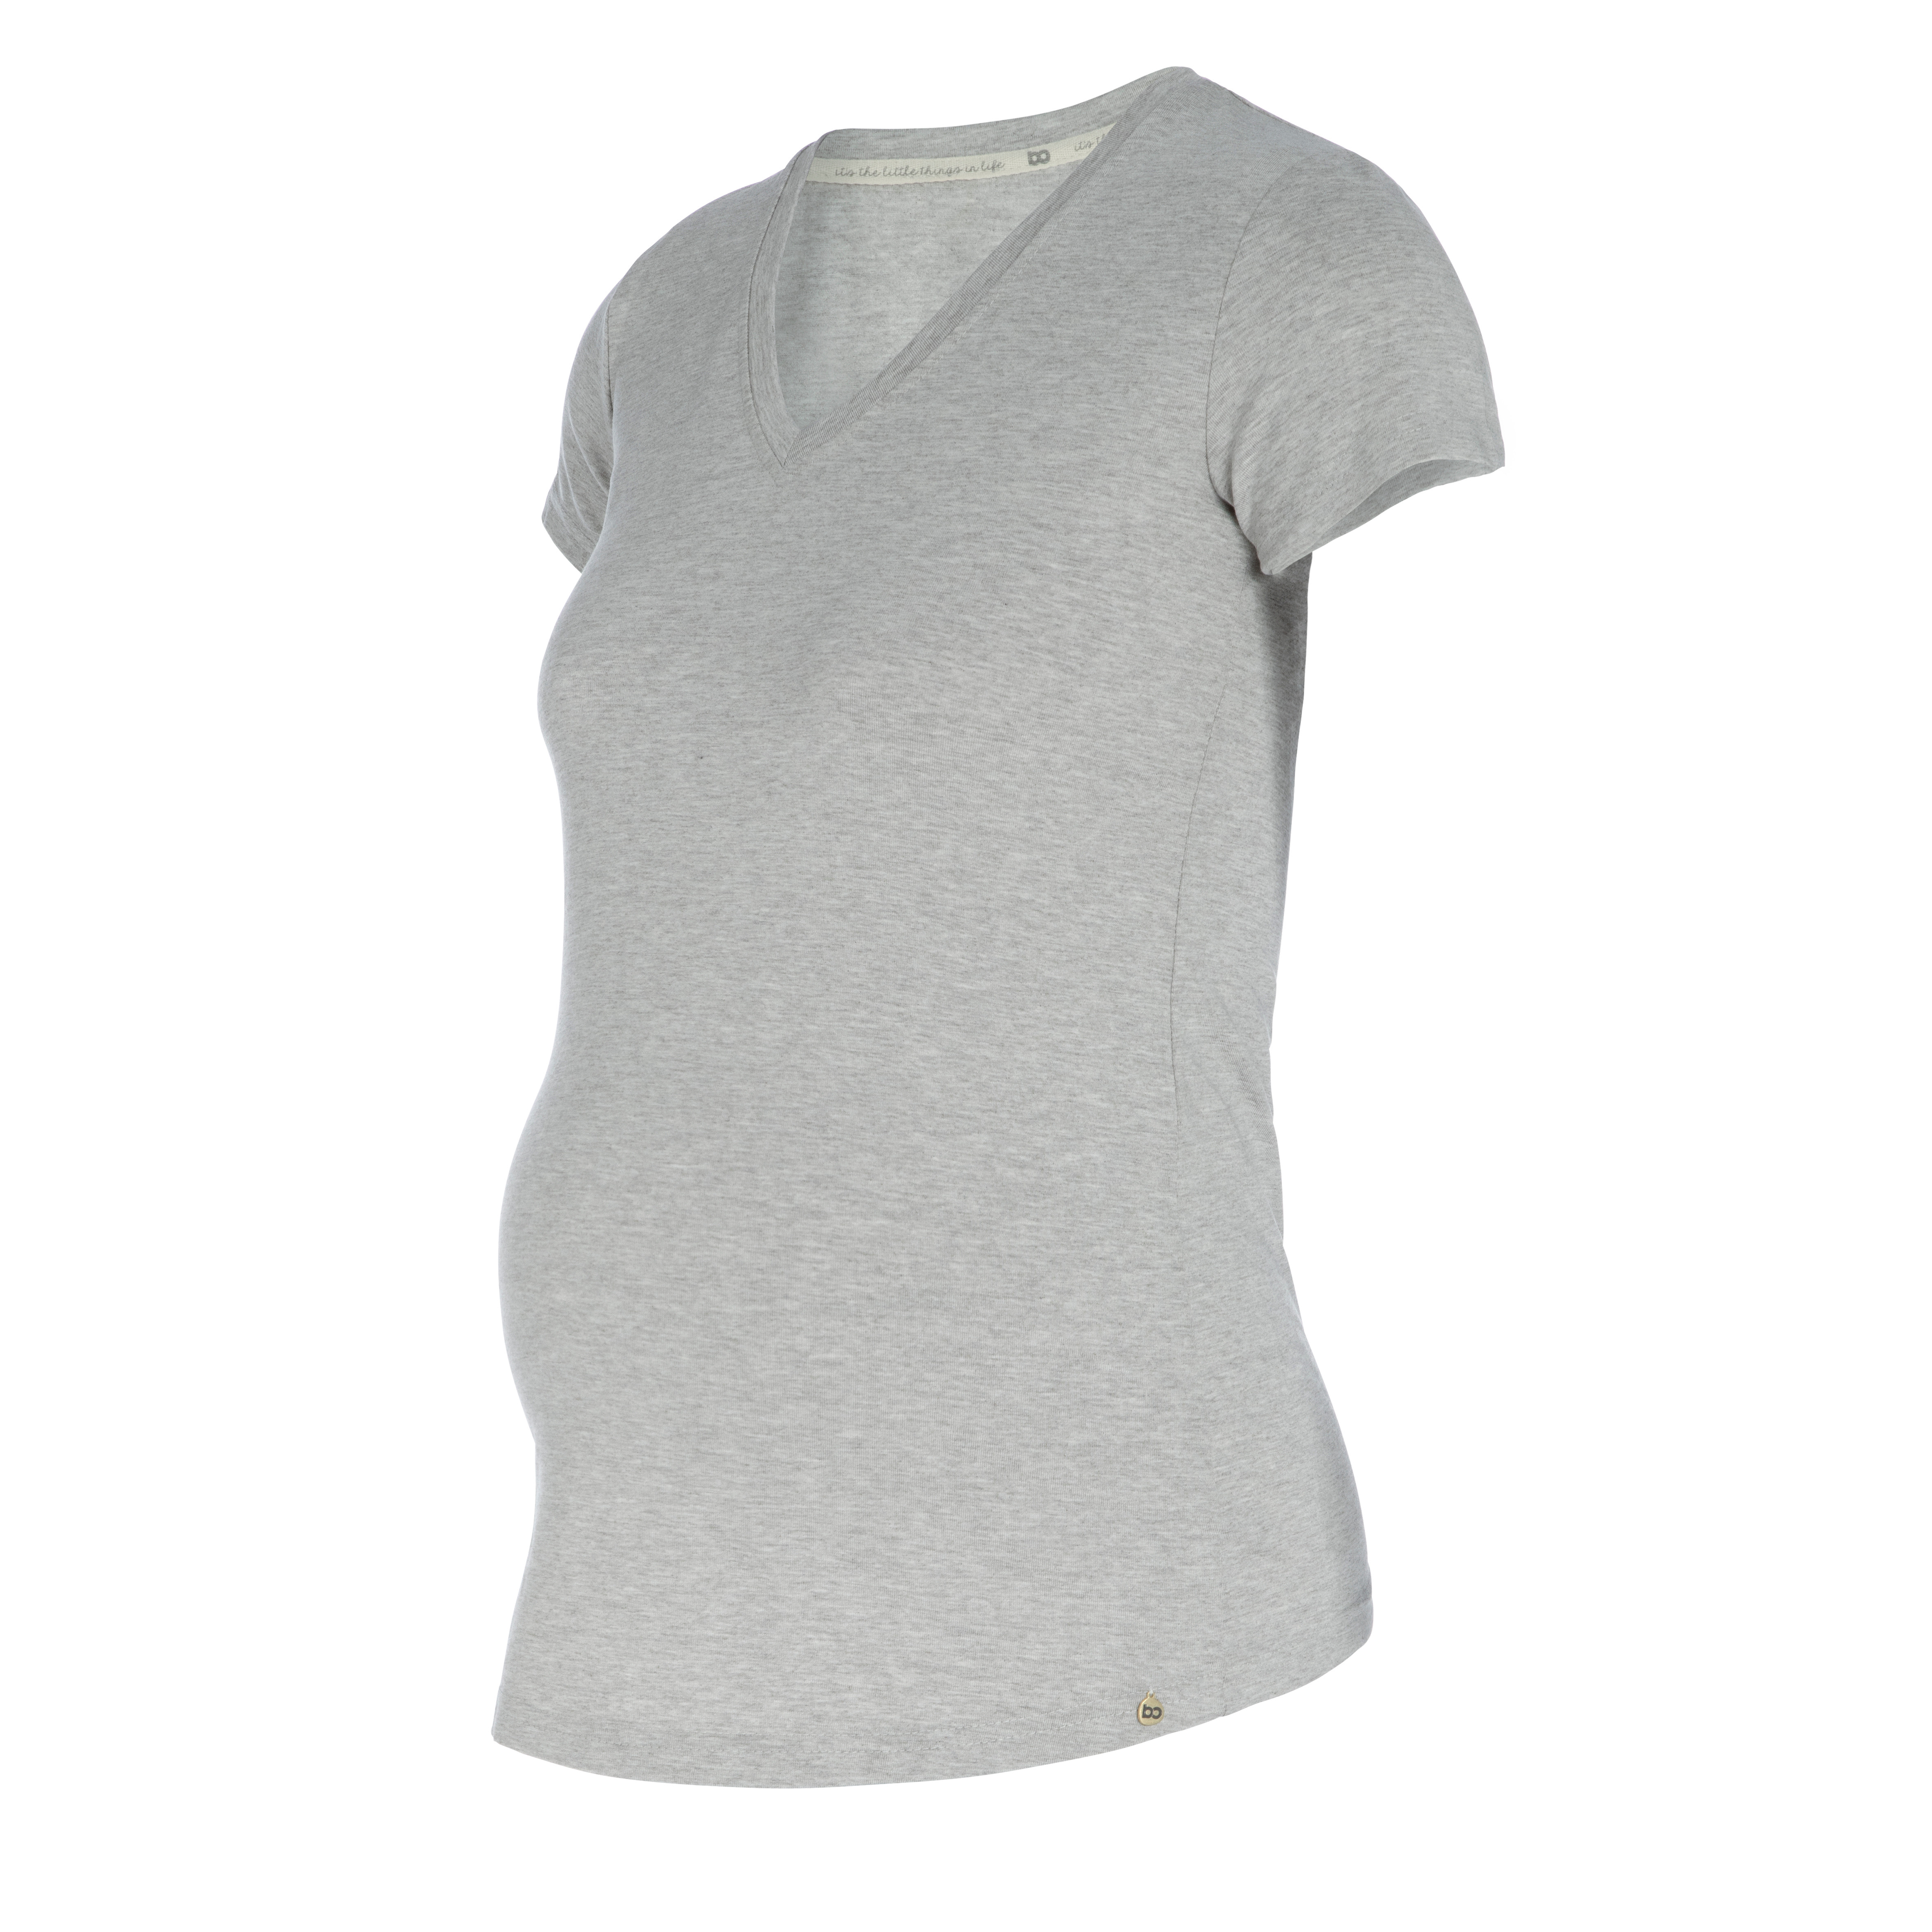 Maternity T-shirt Glow dusty grey - XL